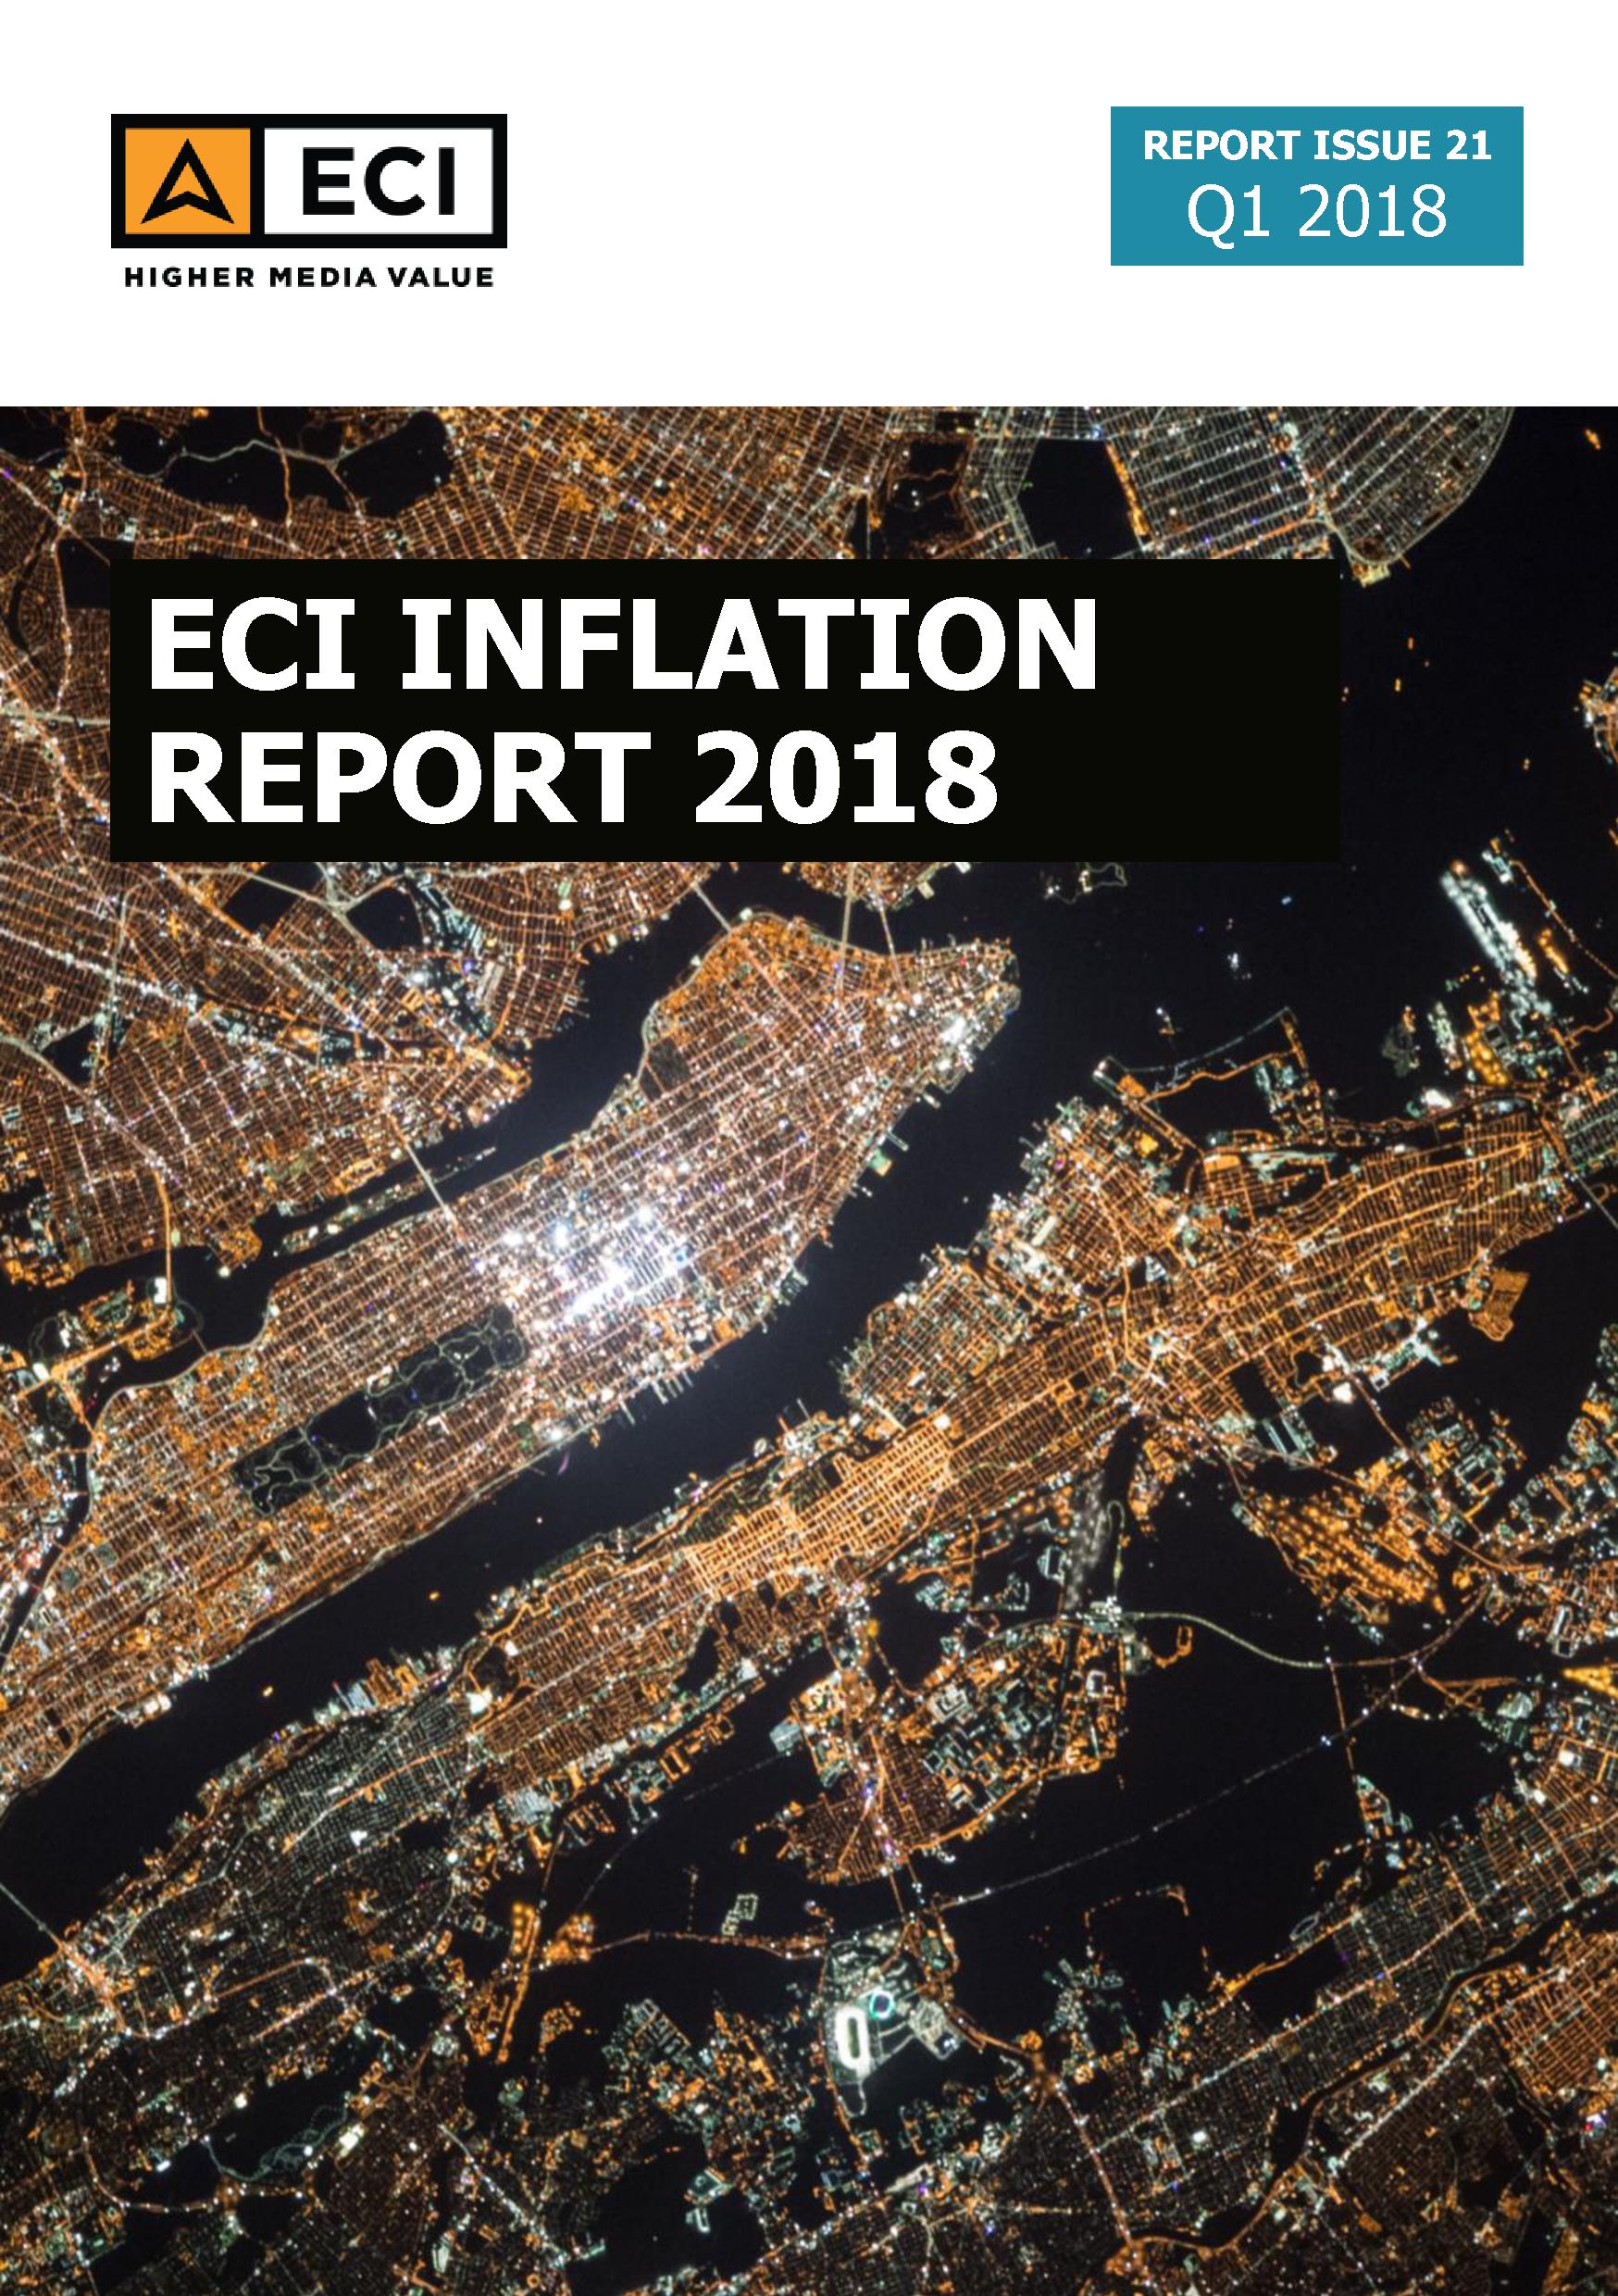 Global Media Inflation Report 2018